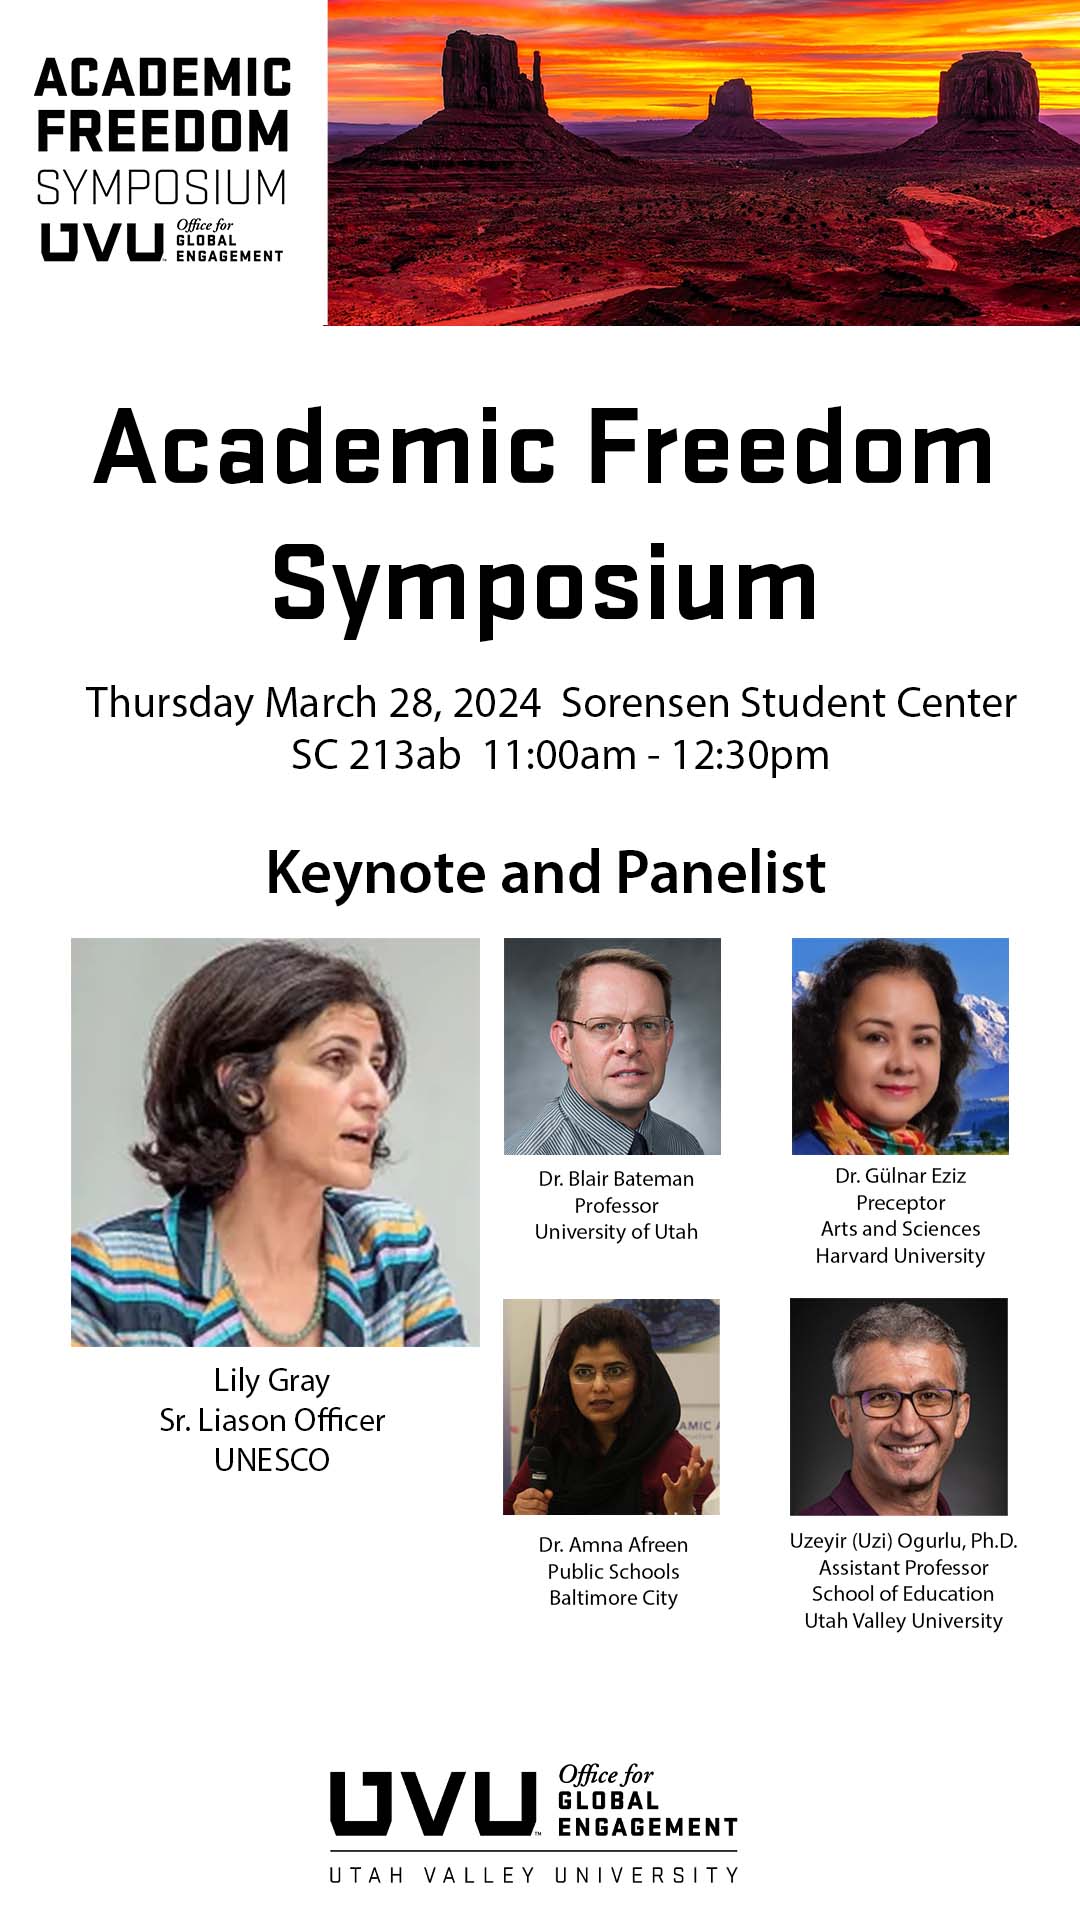 Academic Freedom Symposium: Thursday March 28, 2024 Sorensen Center SC 213ab 11:00am-12:30pm